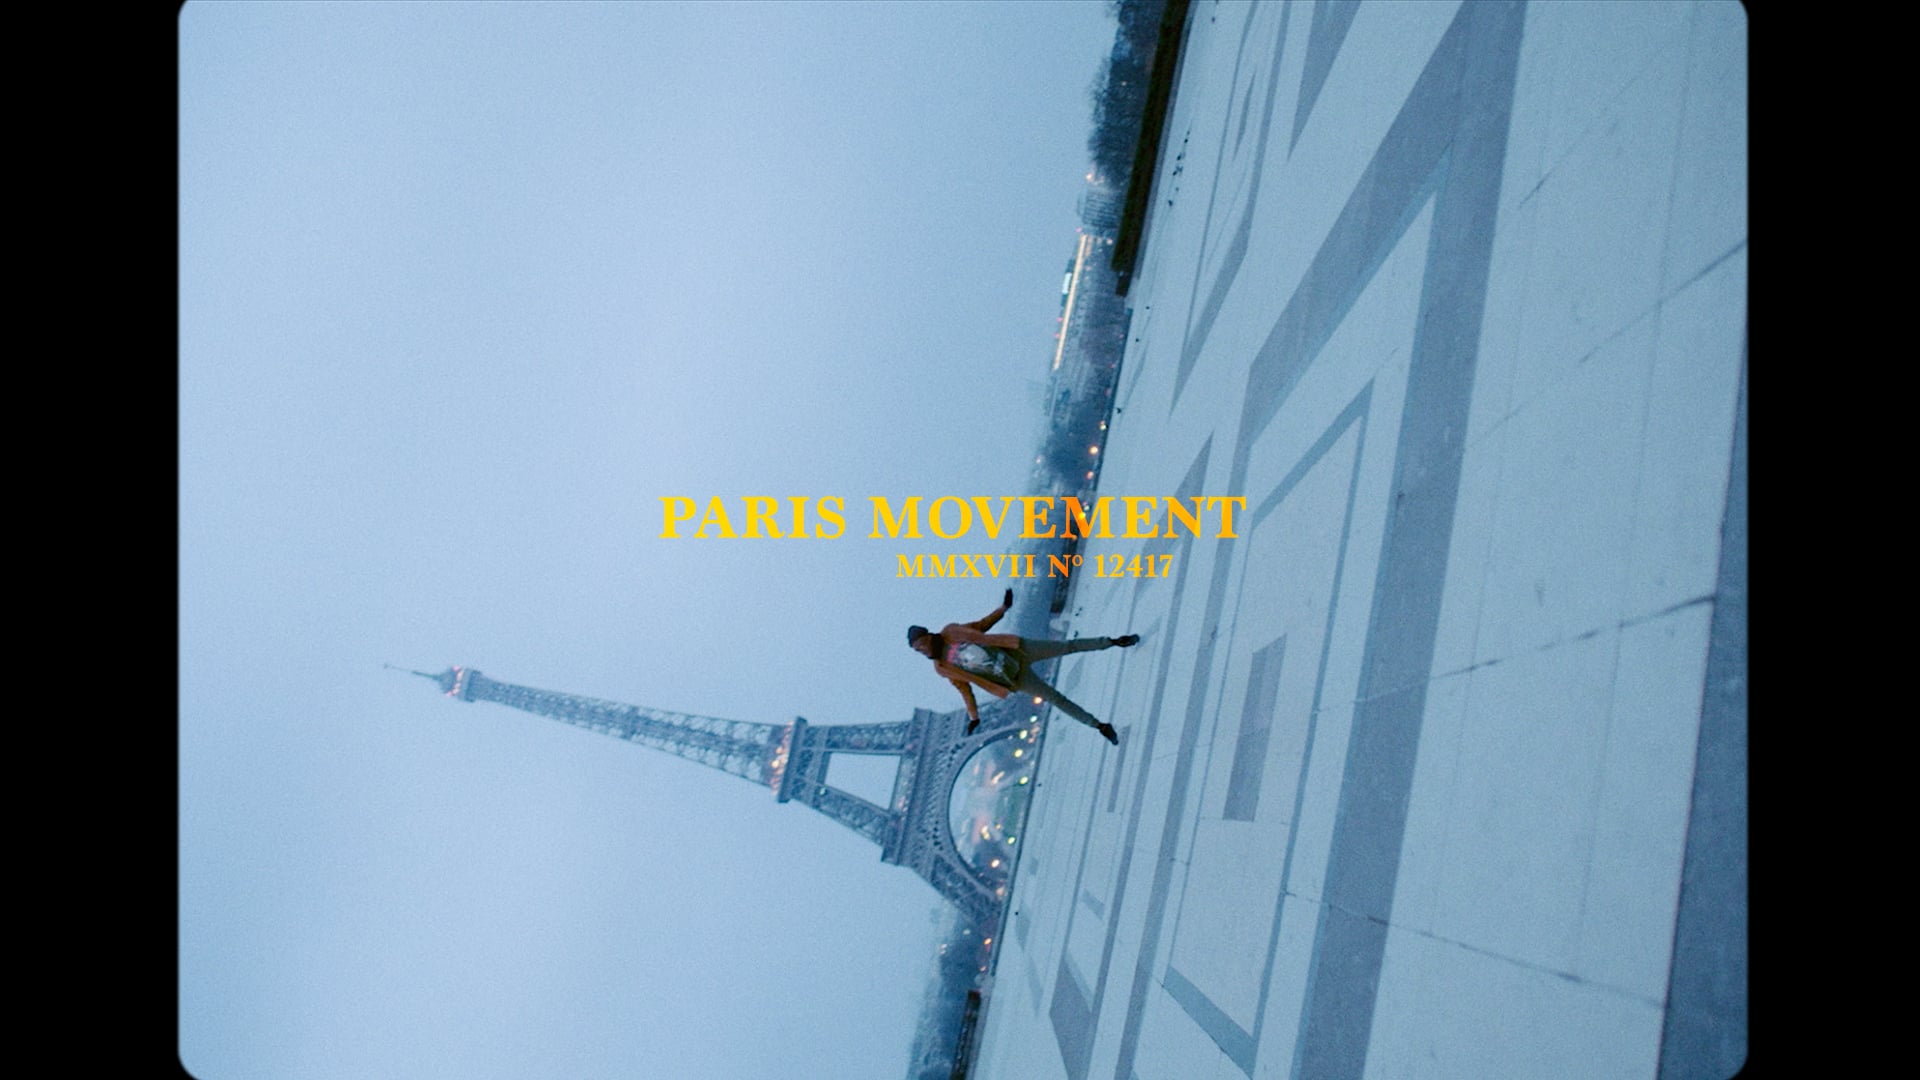 A Movement in Paris